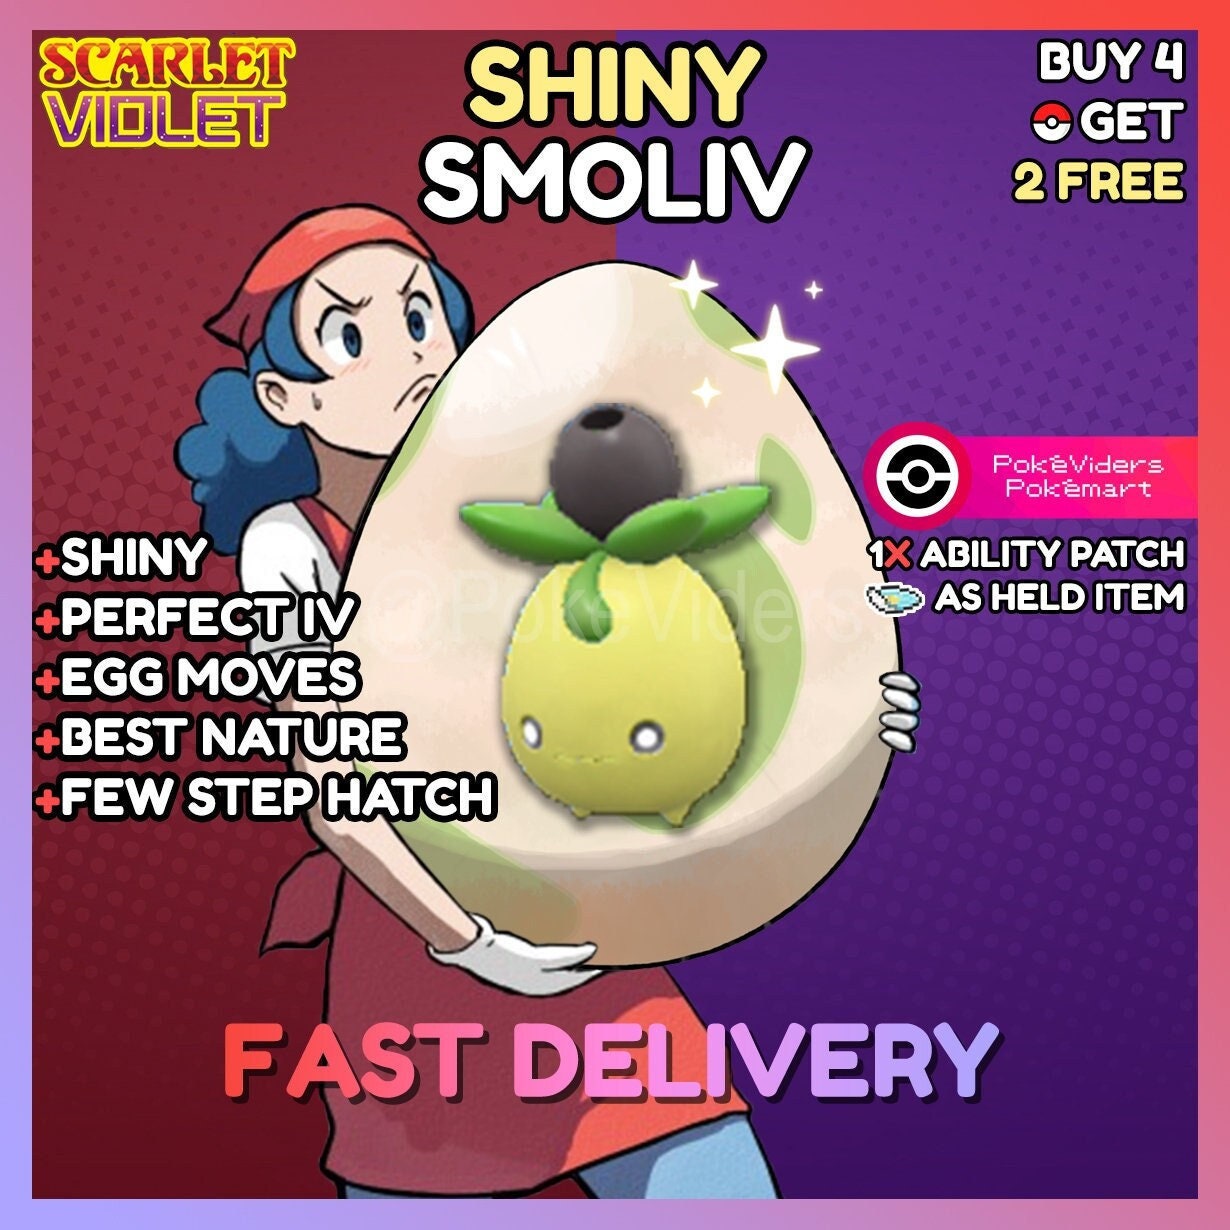 ✨ SHINY ✨GIRATINA LEVEL 1 6IV Pokemon Brilliant Diamond Shining Pearl FAST  TRADE